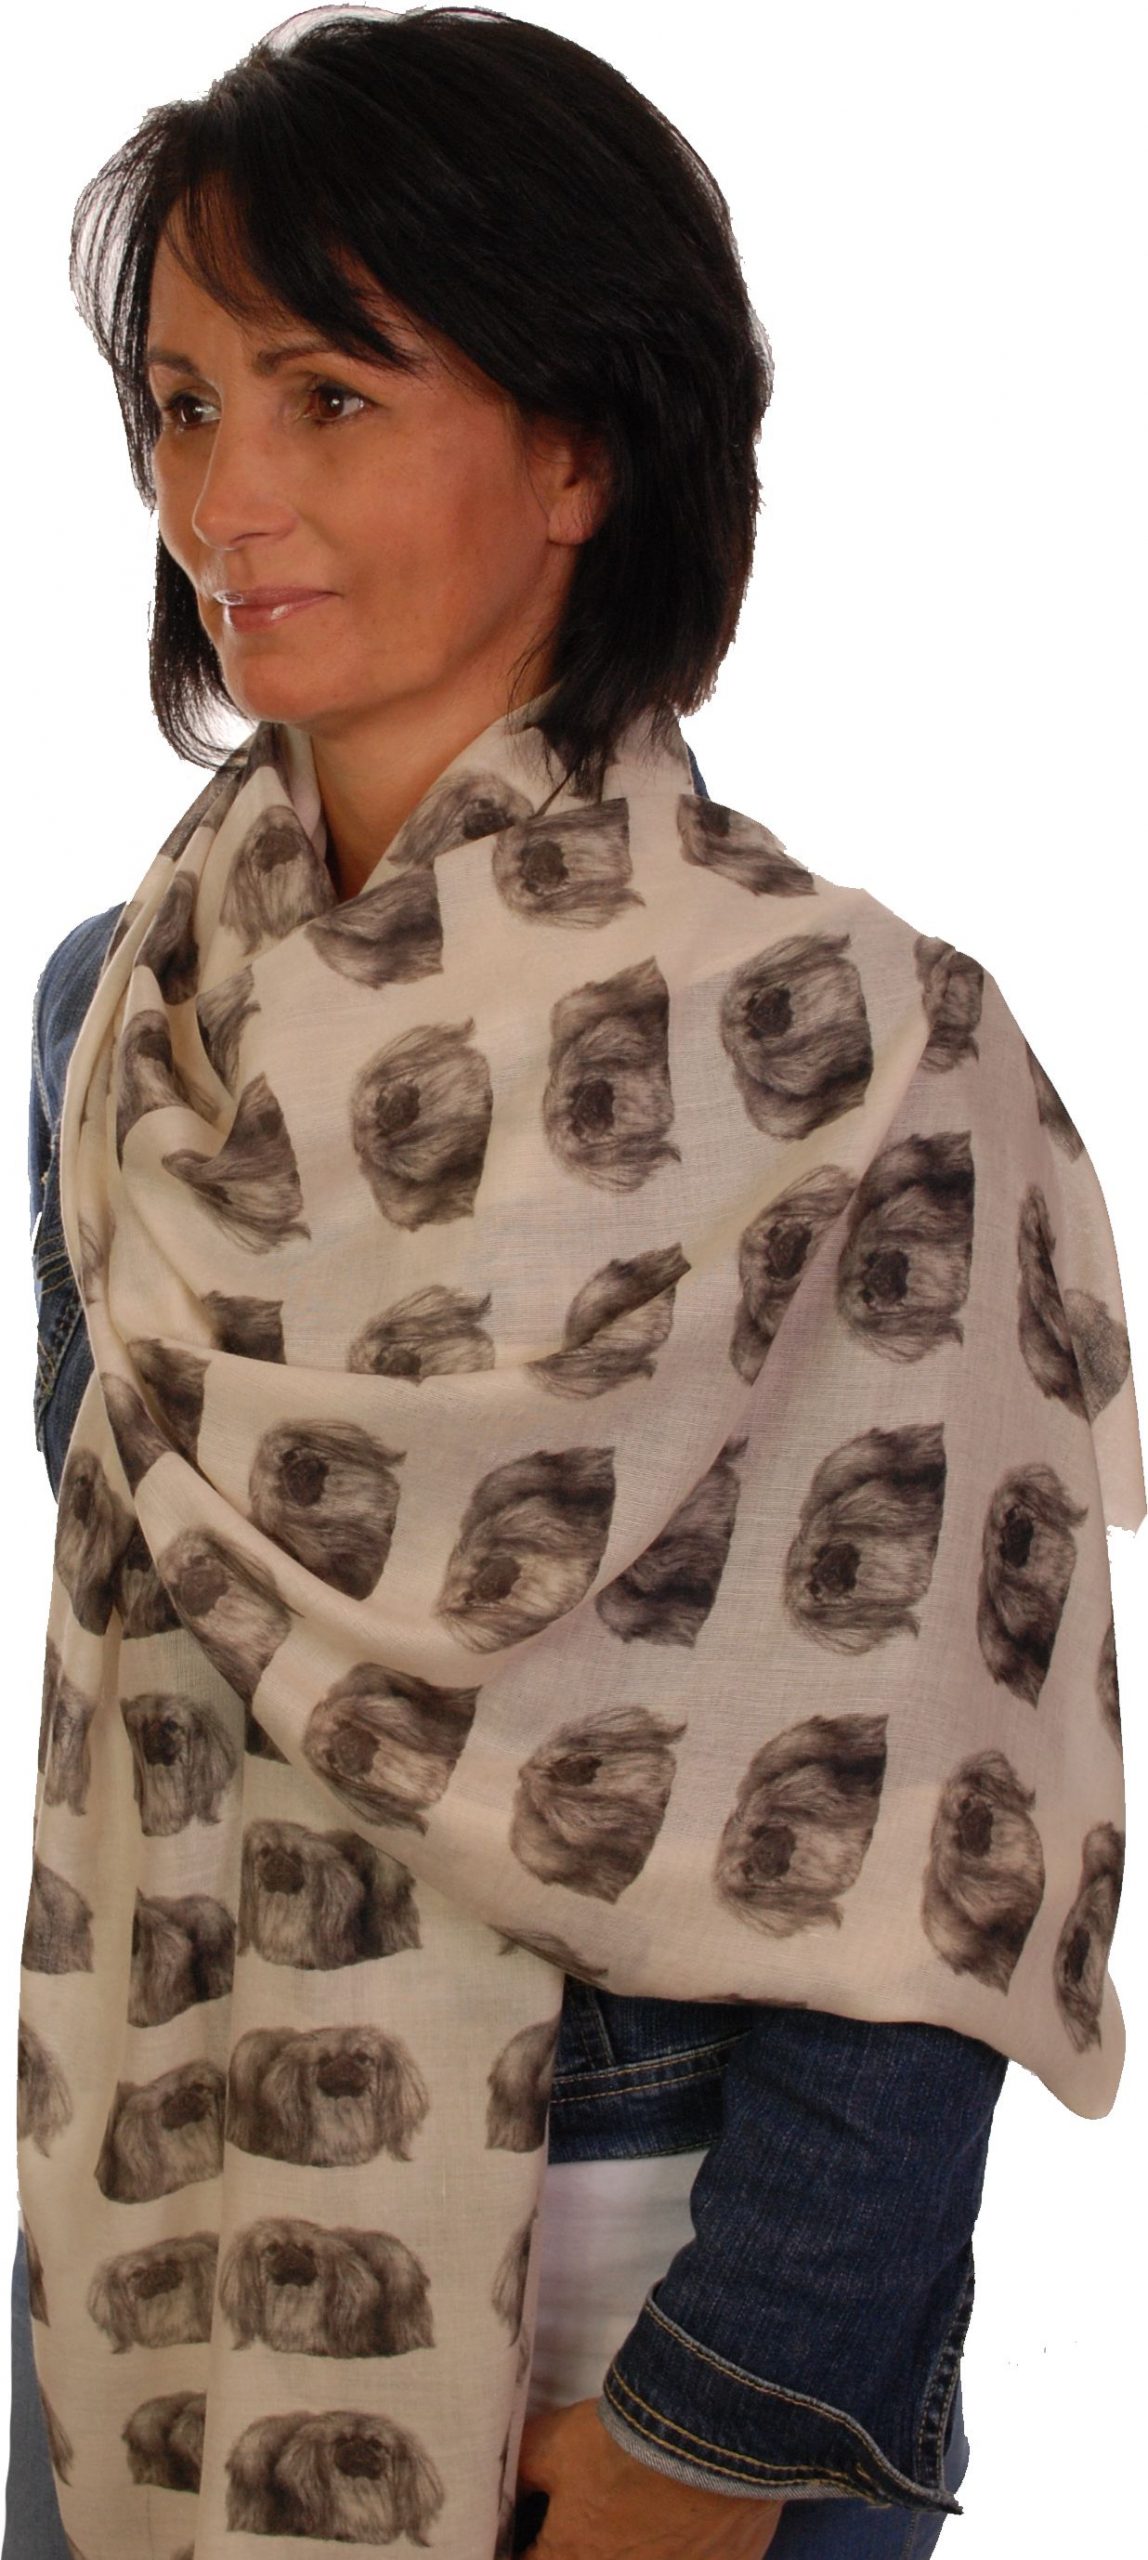 Mike Sibley Pekingese licensed design ladies fashion scarf